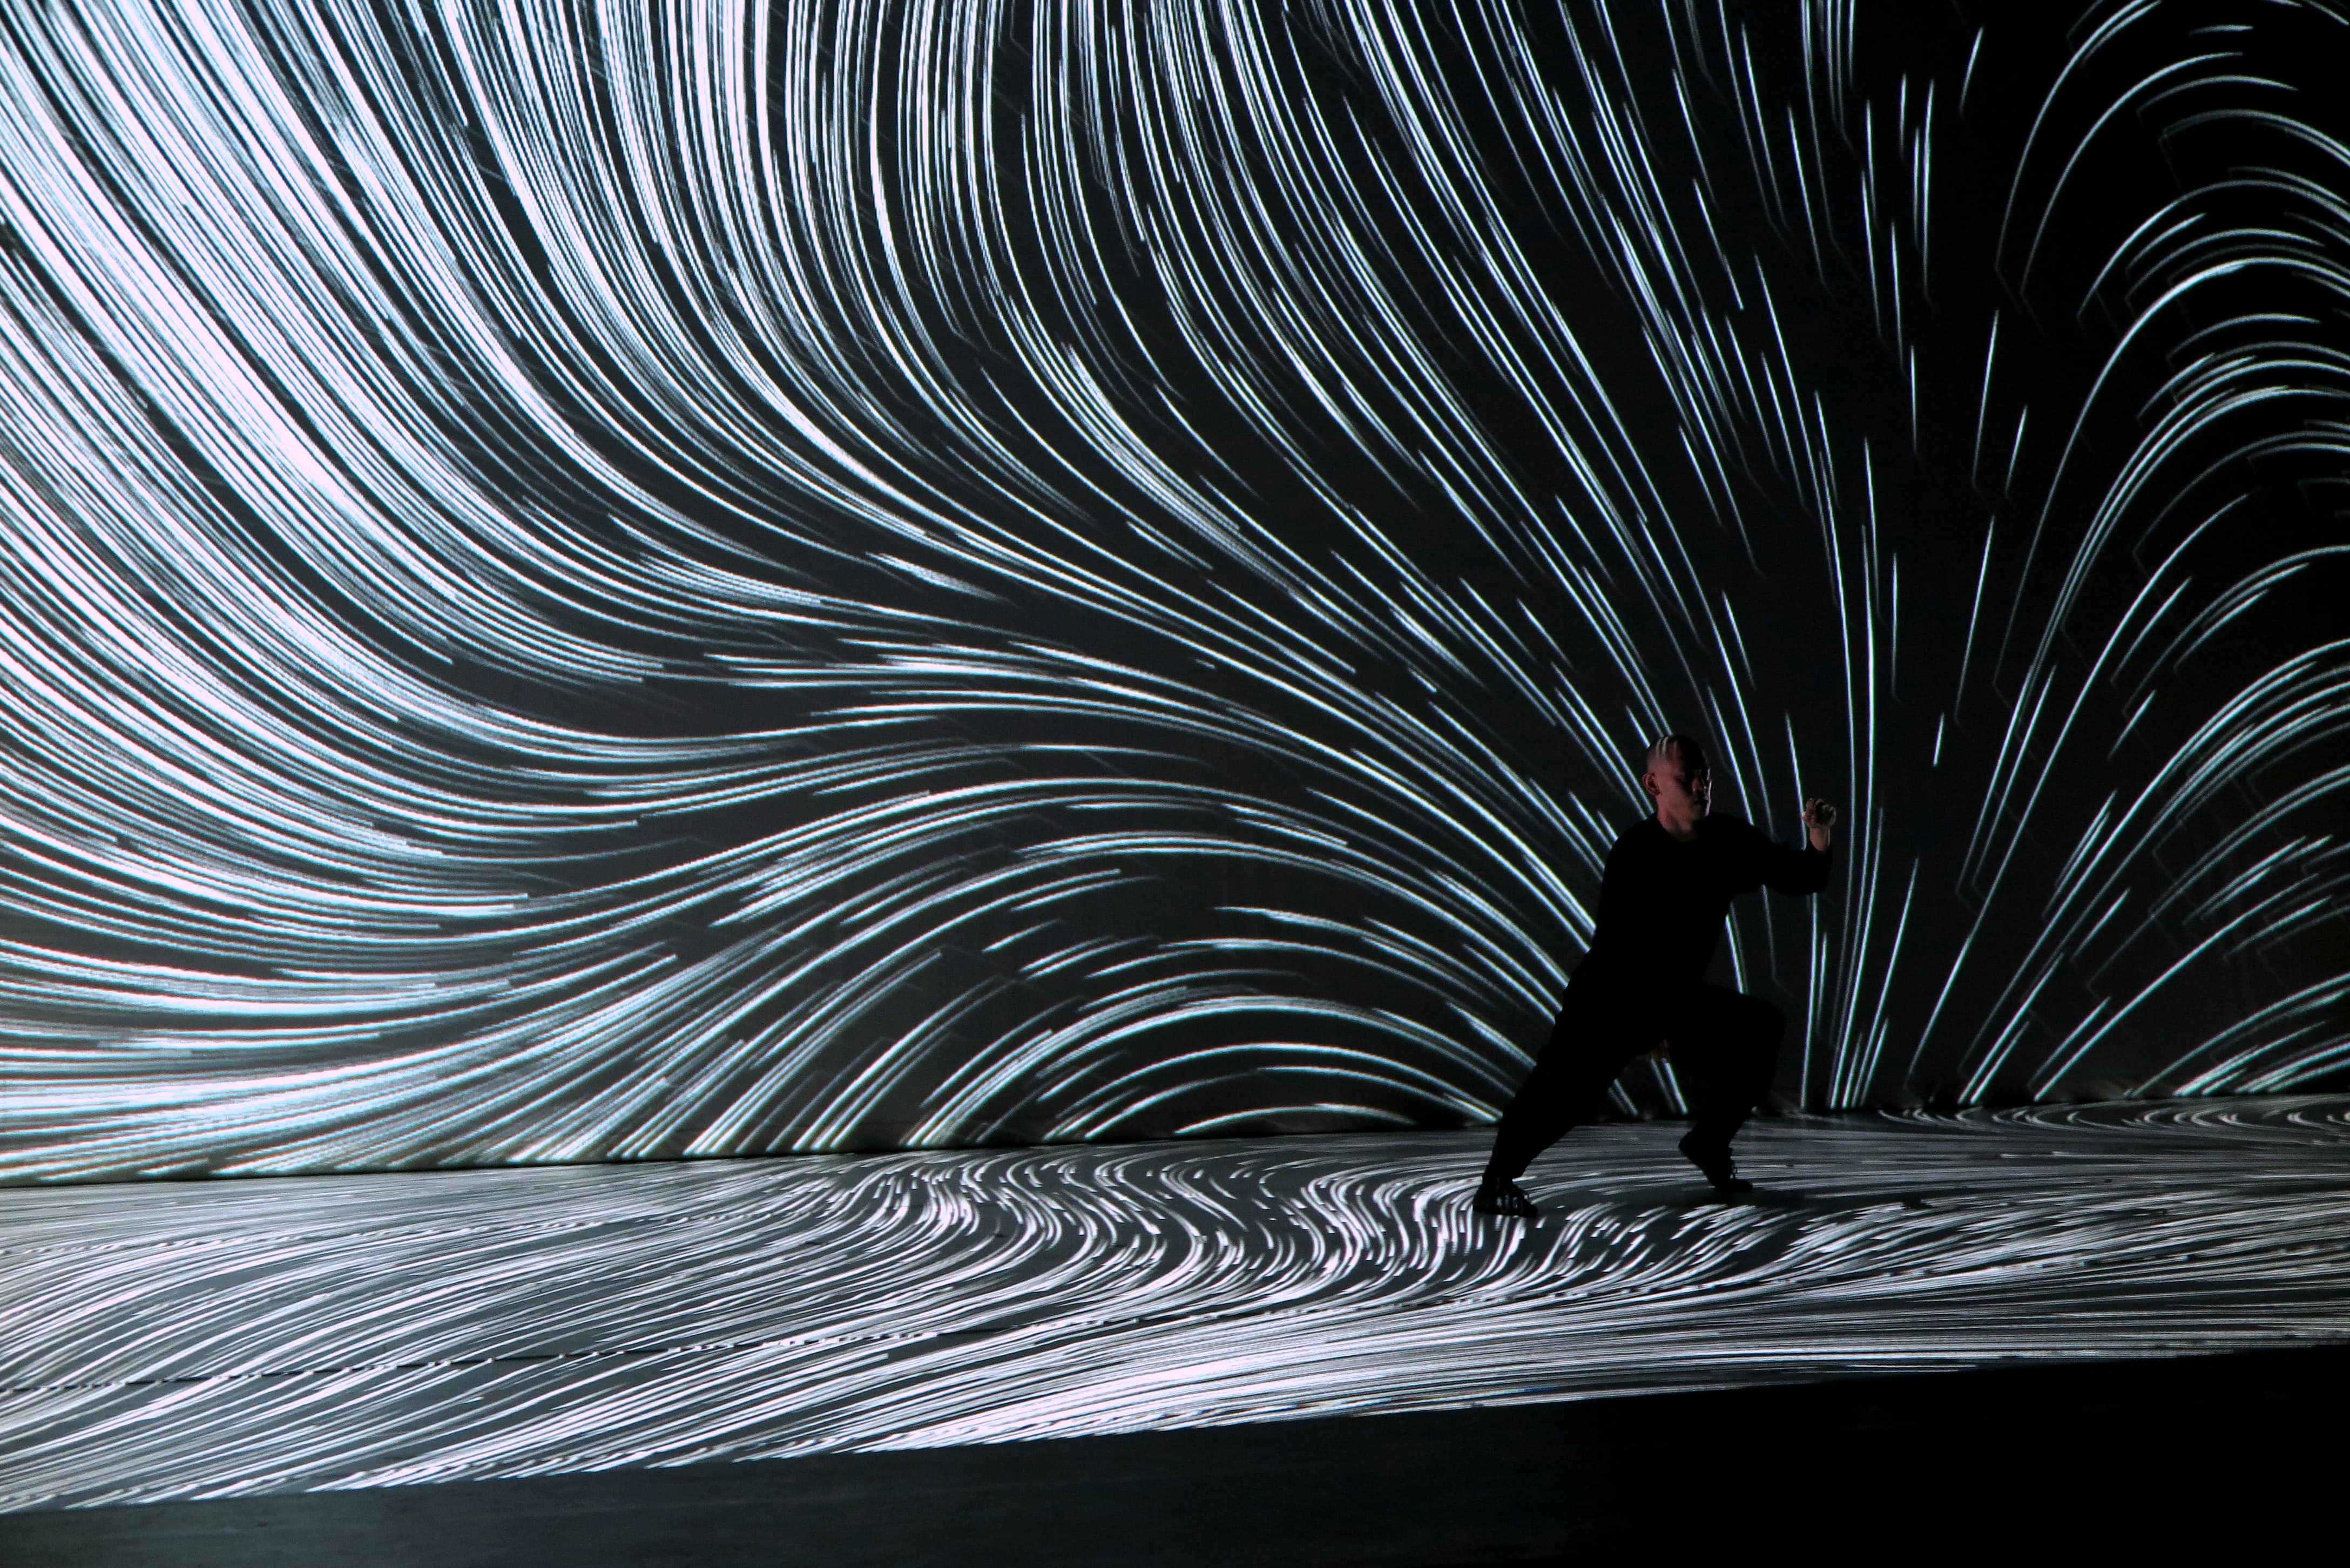 Matera 2019, la performance “Intensional Particle” con l’artista giapponese Hiroaki Umeda